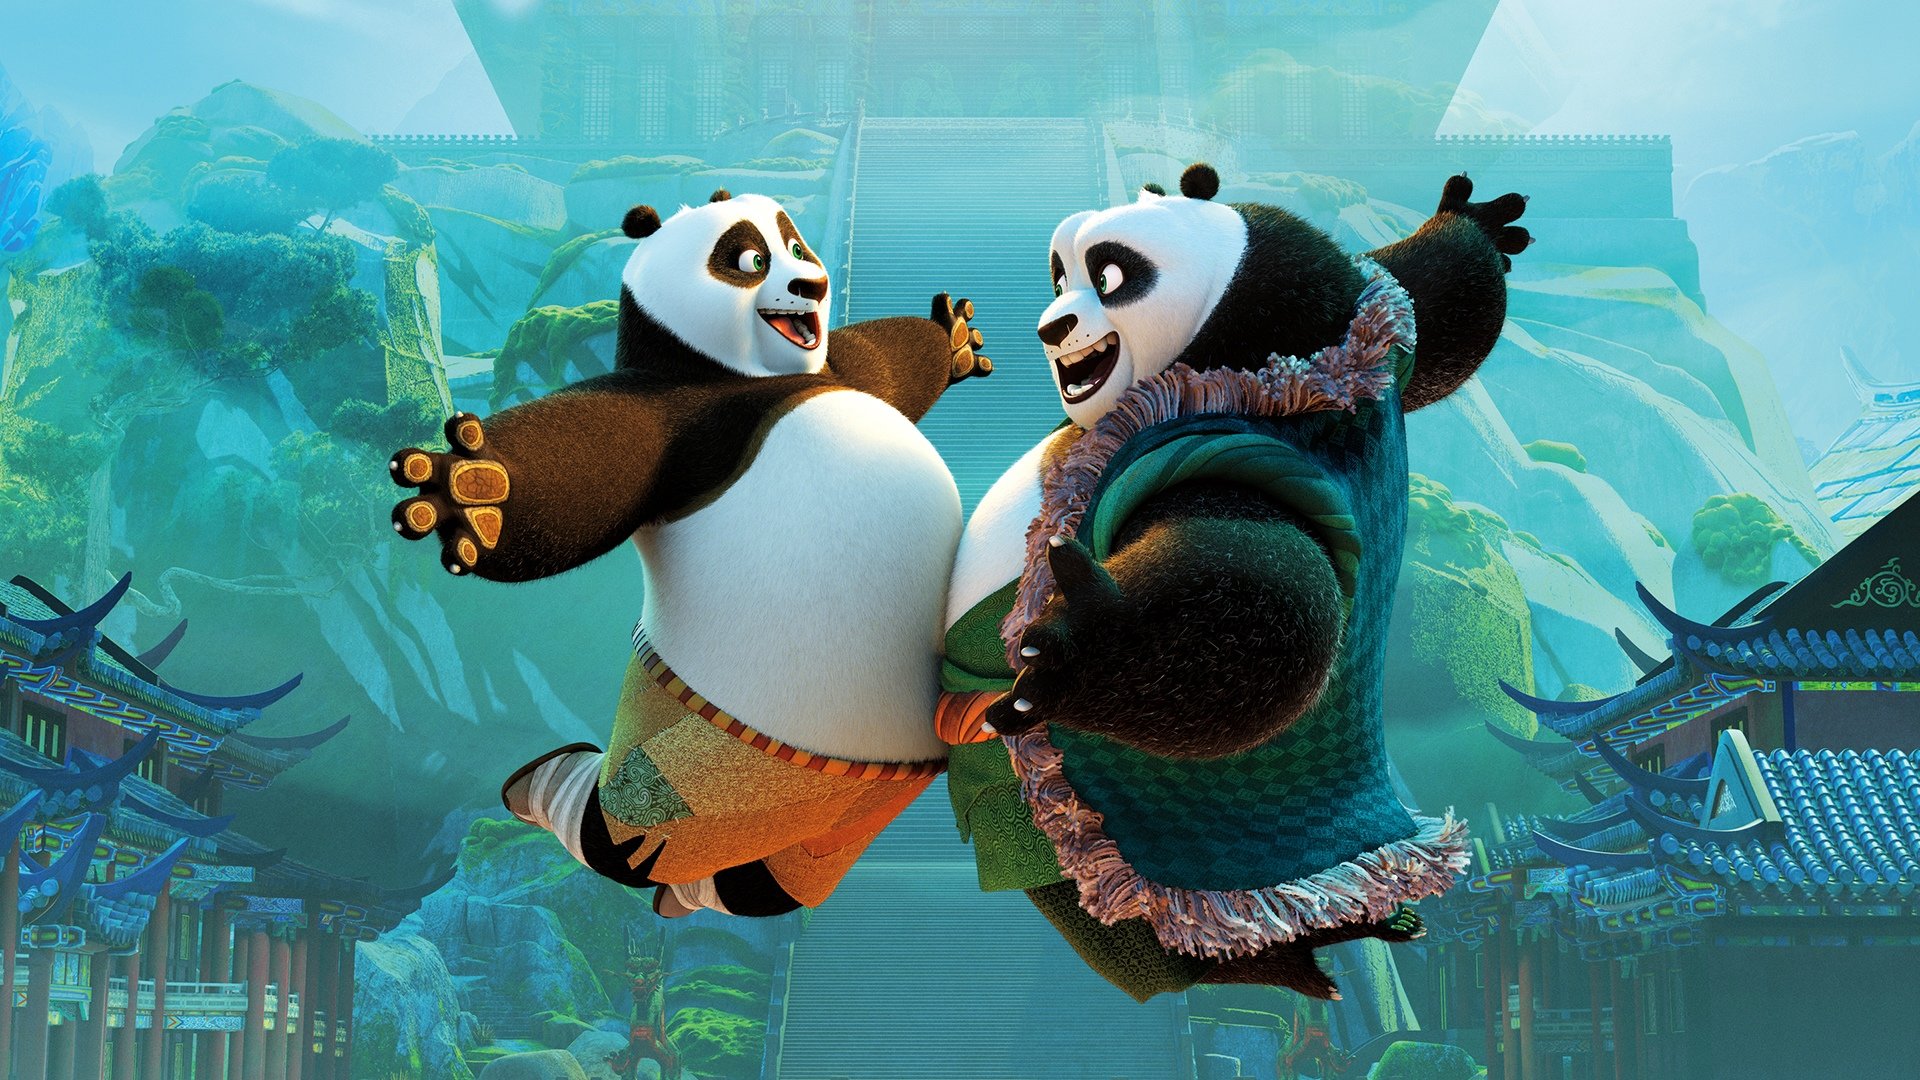 Kung Fu Panda wallpapers 1920x1080 Full HD (1080p) desktop backgrounds